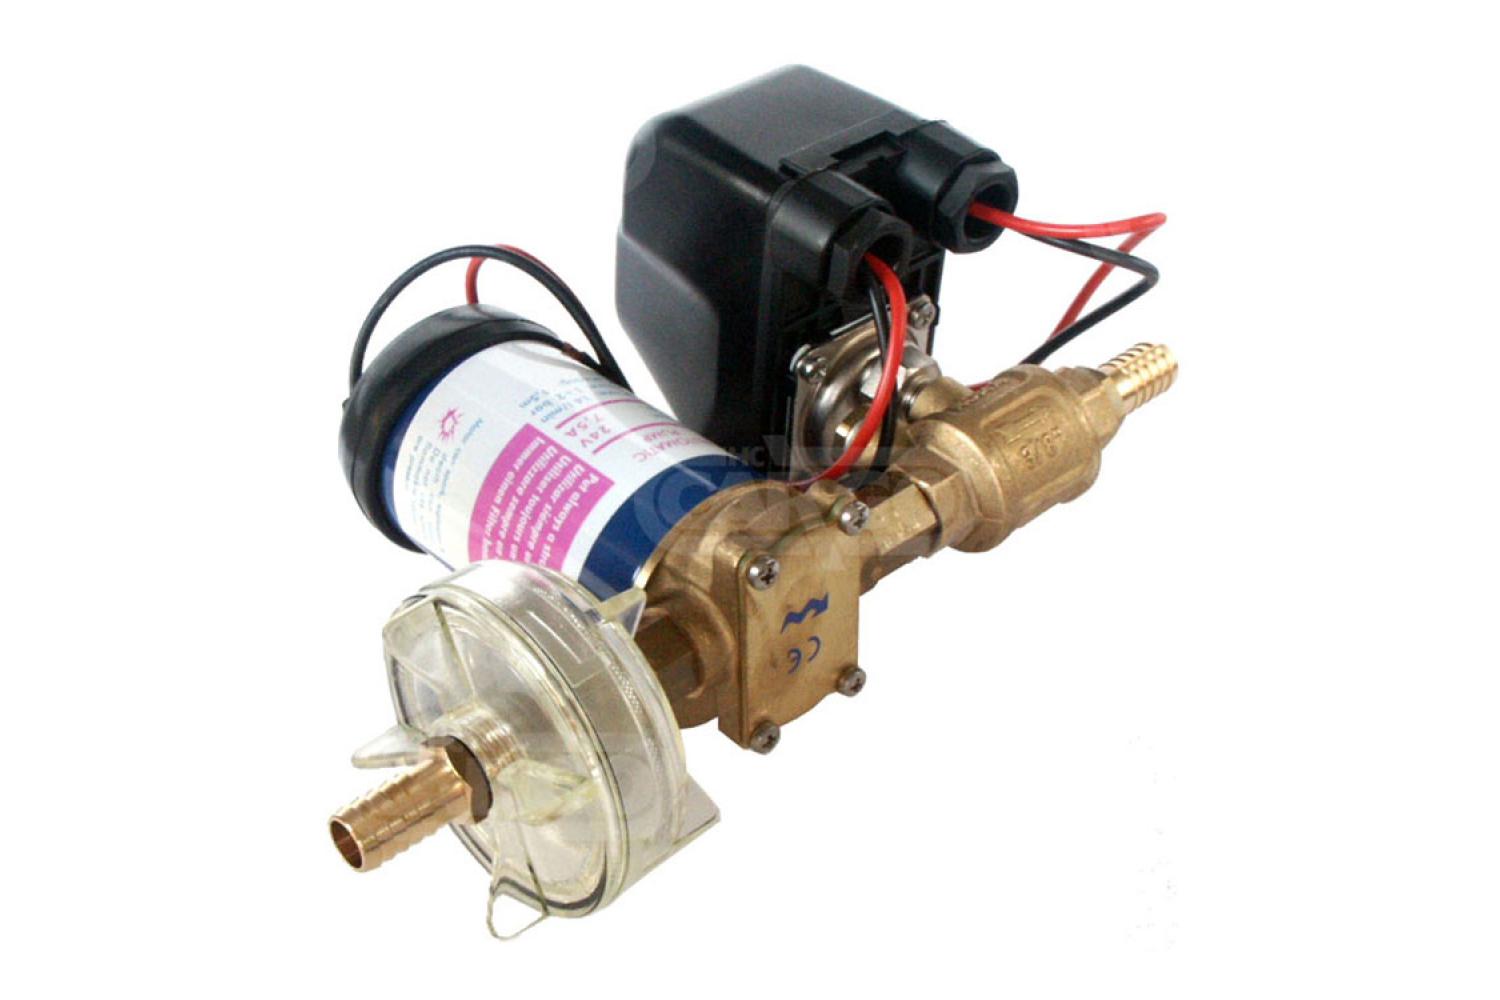 Elektronische Wasserpumpe EWP115, Wasserpumpen, Kühlsystem-Zubehör, Fahrzeugtechnik